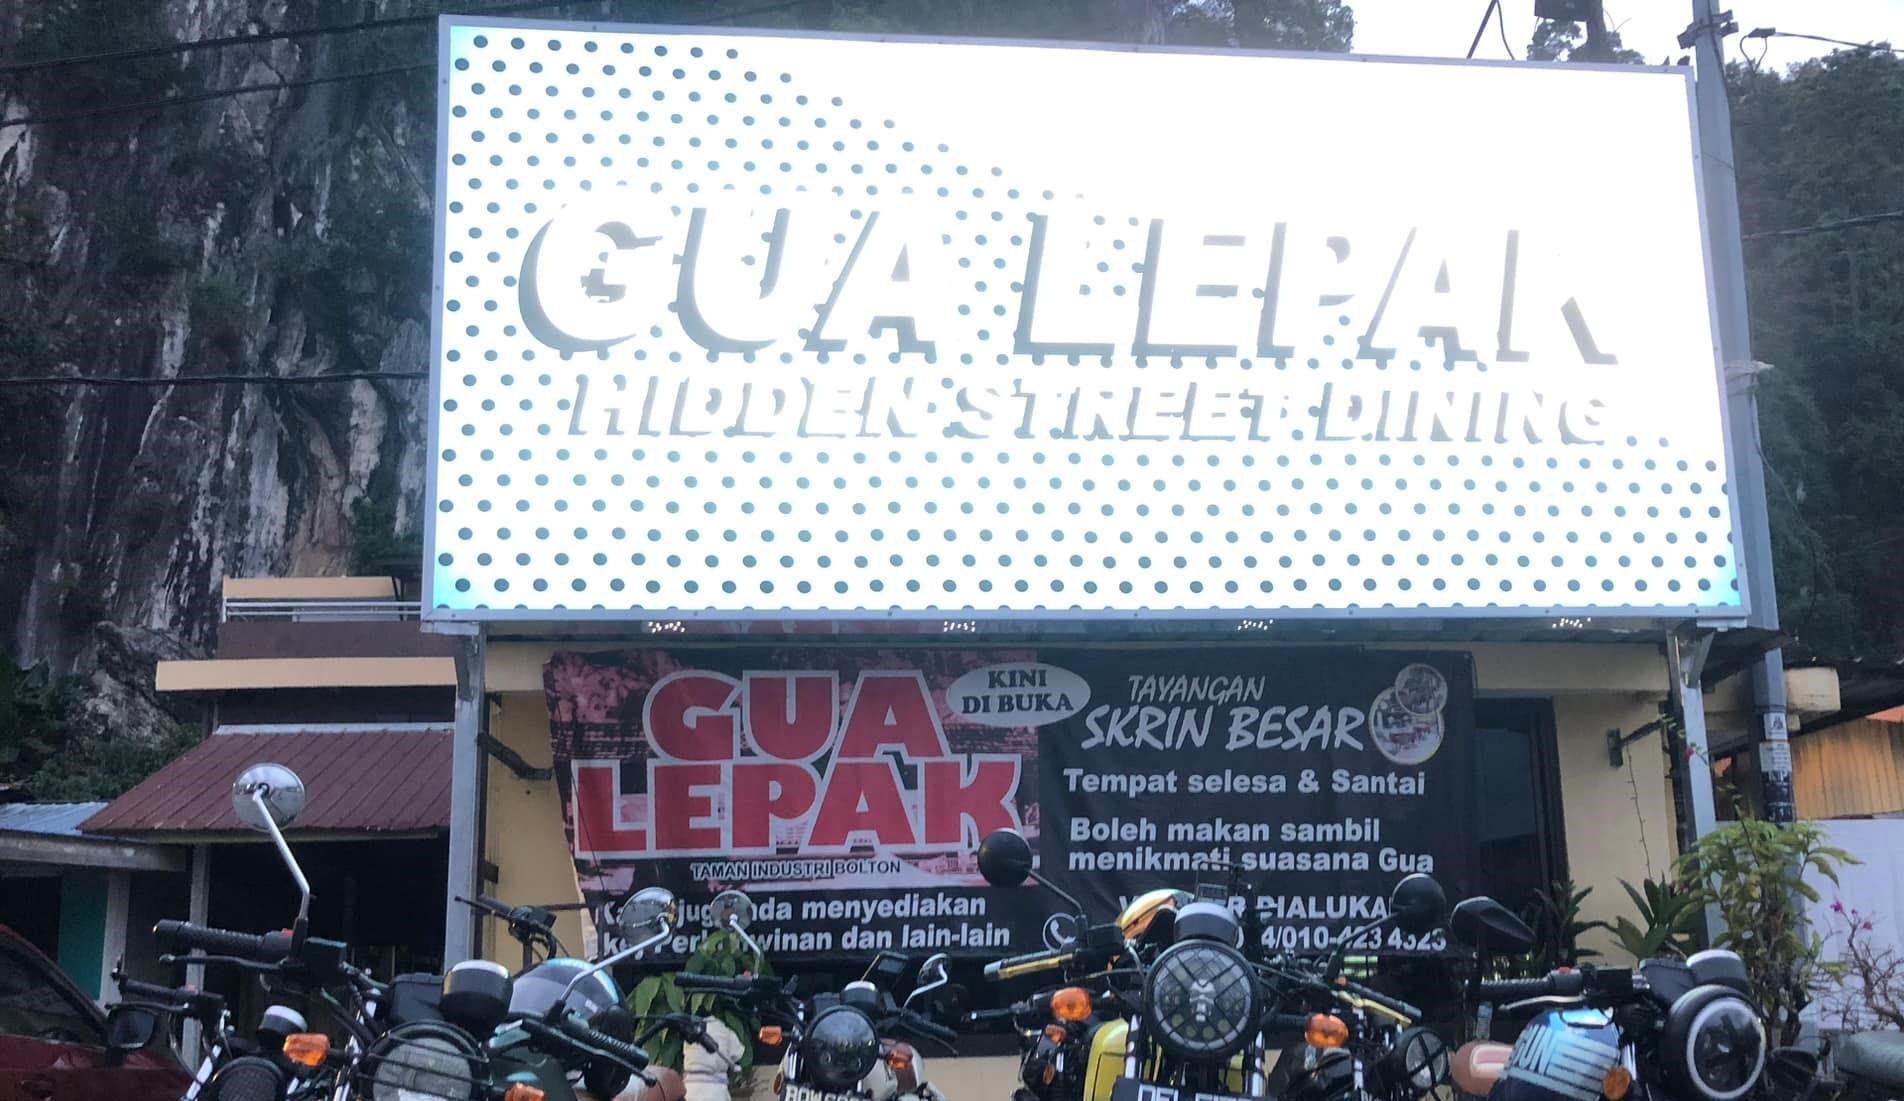 Minerals Dept says not consulted on Gua Lepak restaurant’s development